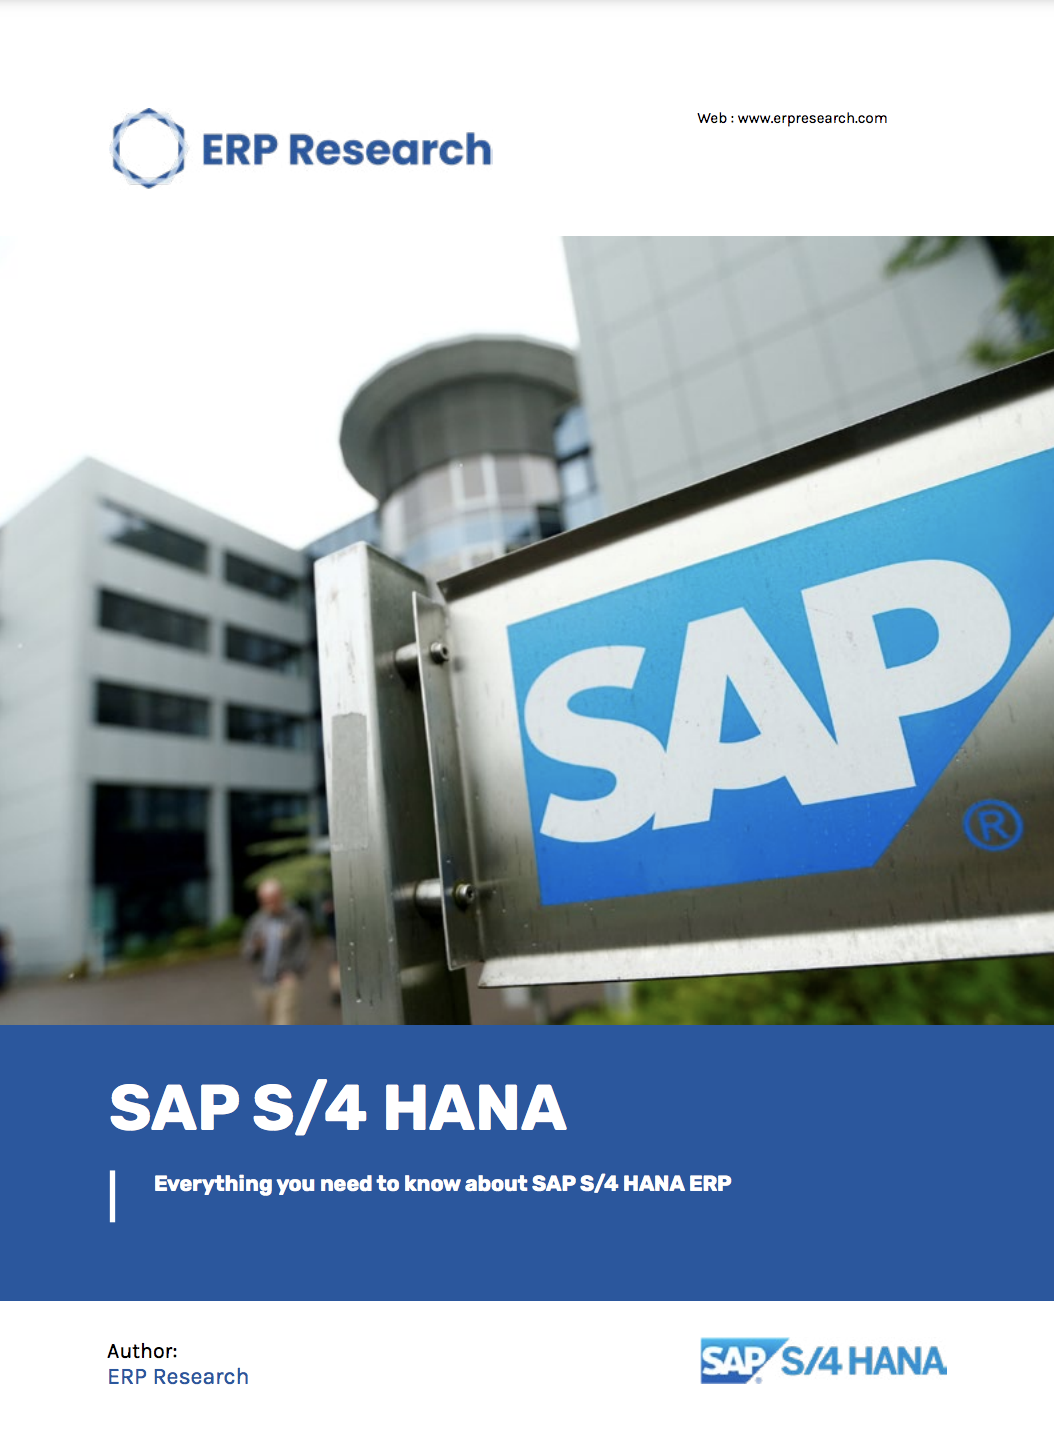 Download the SAP S/4 HANA Ebook